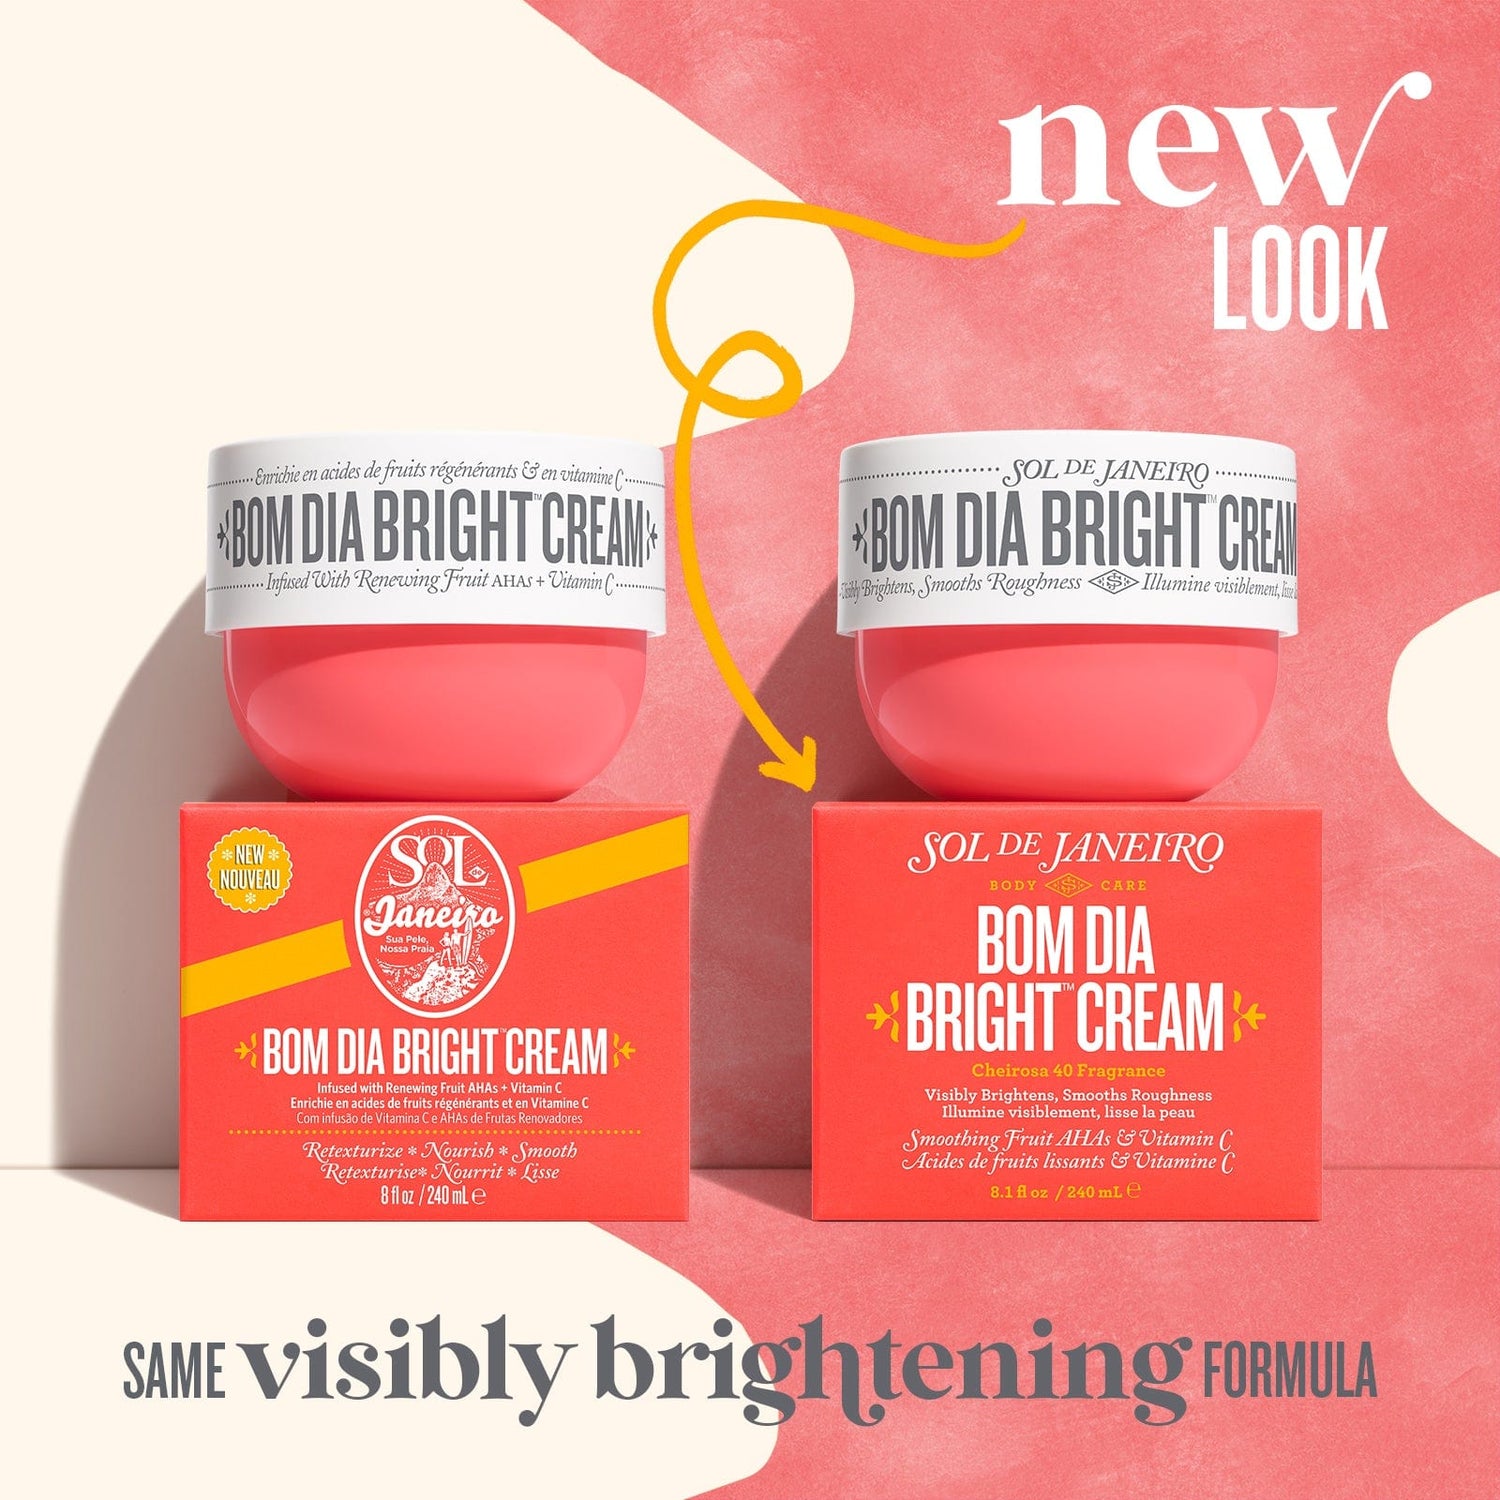 New Look - same visibly brightening formula 